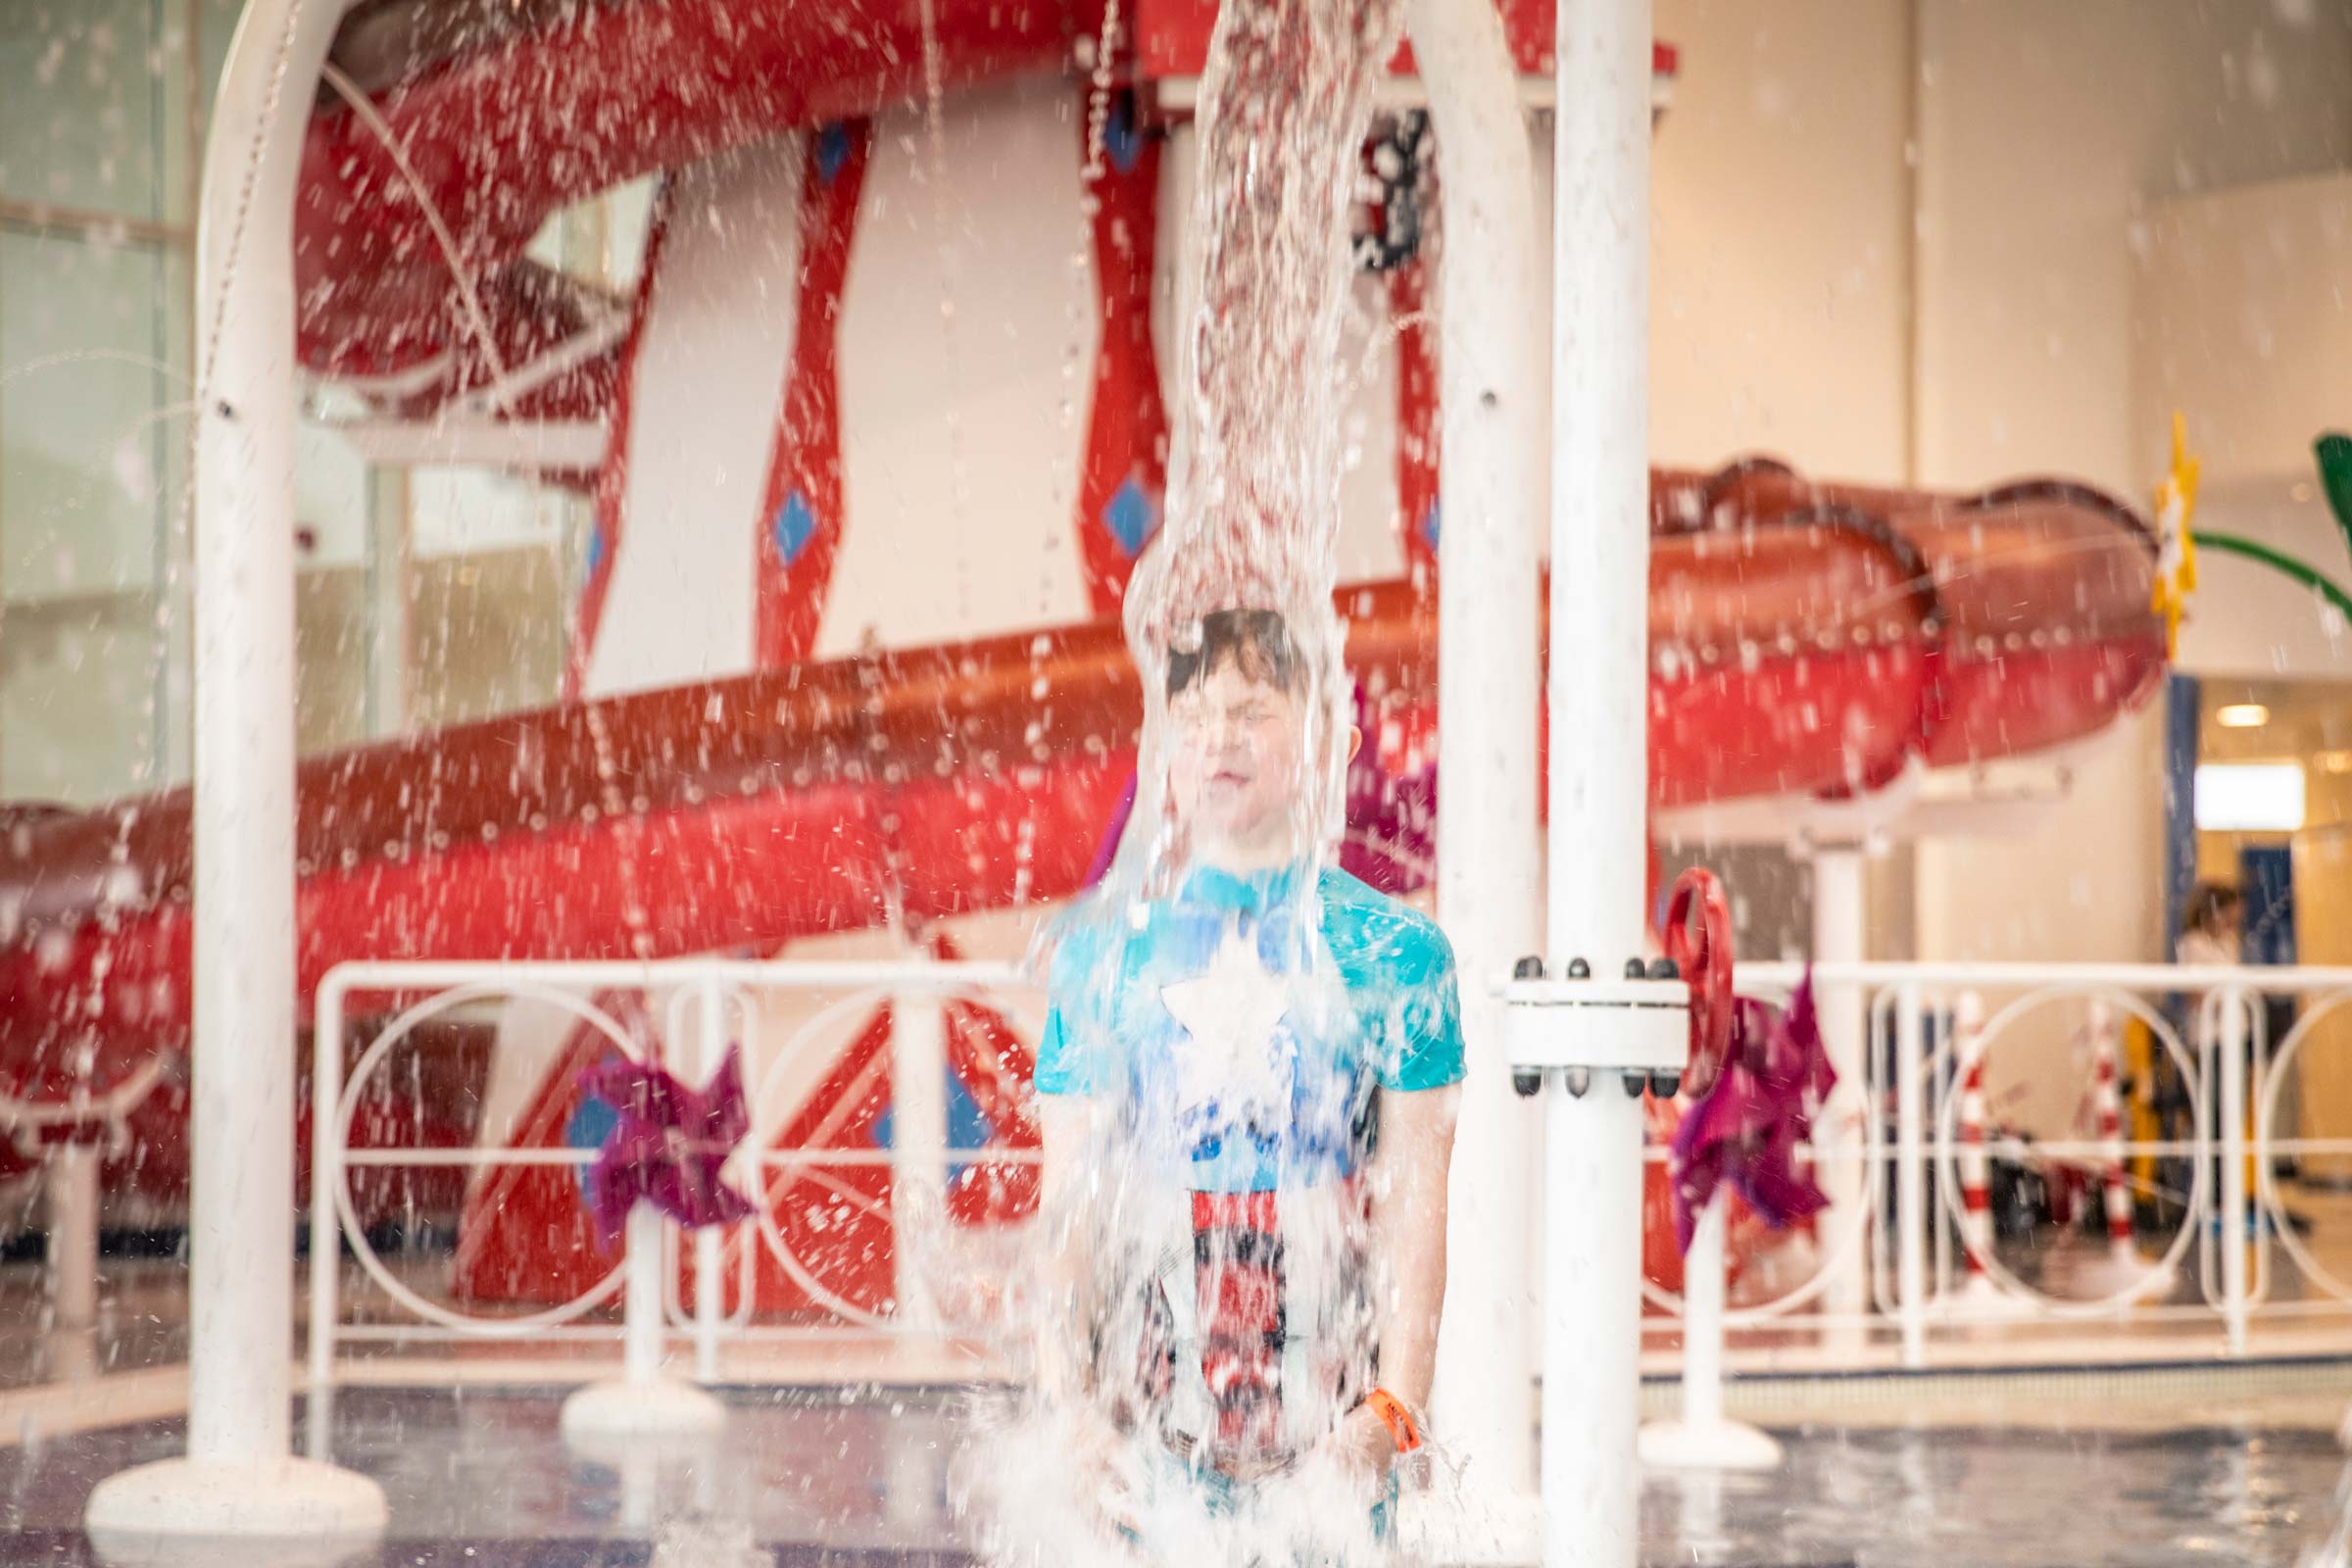 Butlin's Bognor Regis Resort - Child being splashed